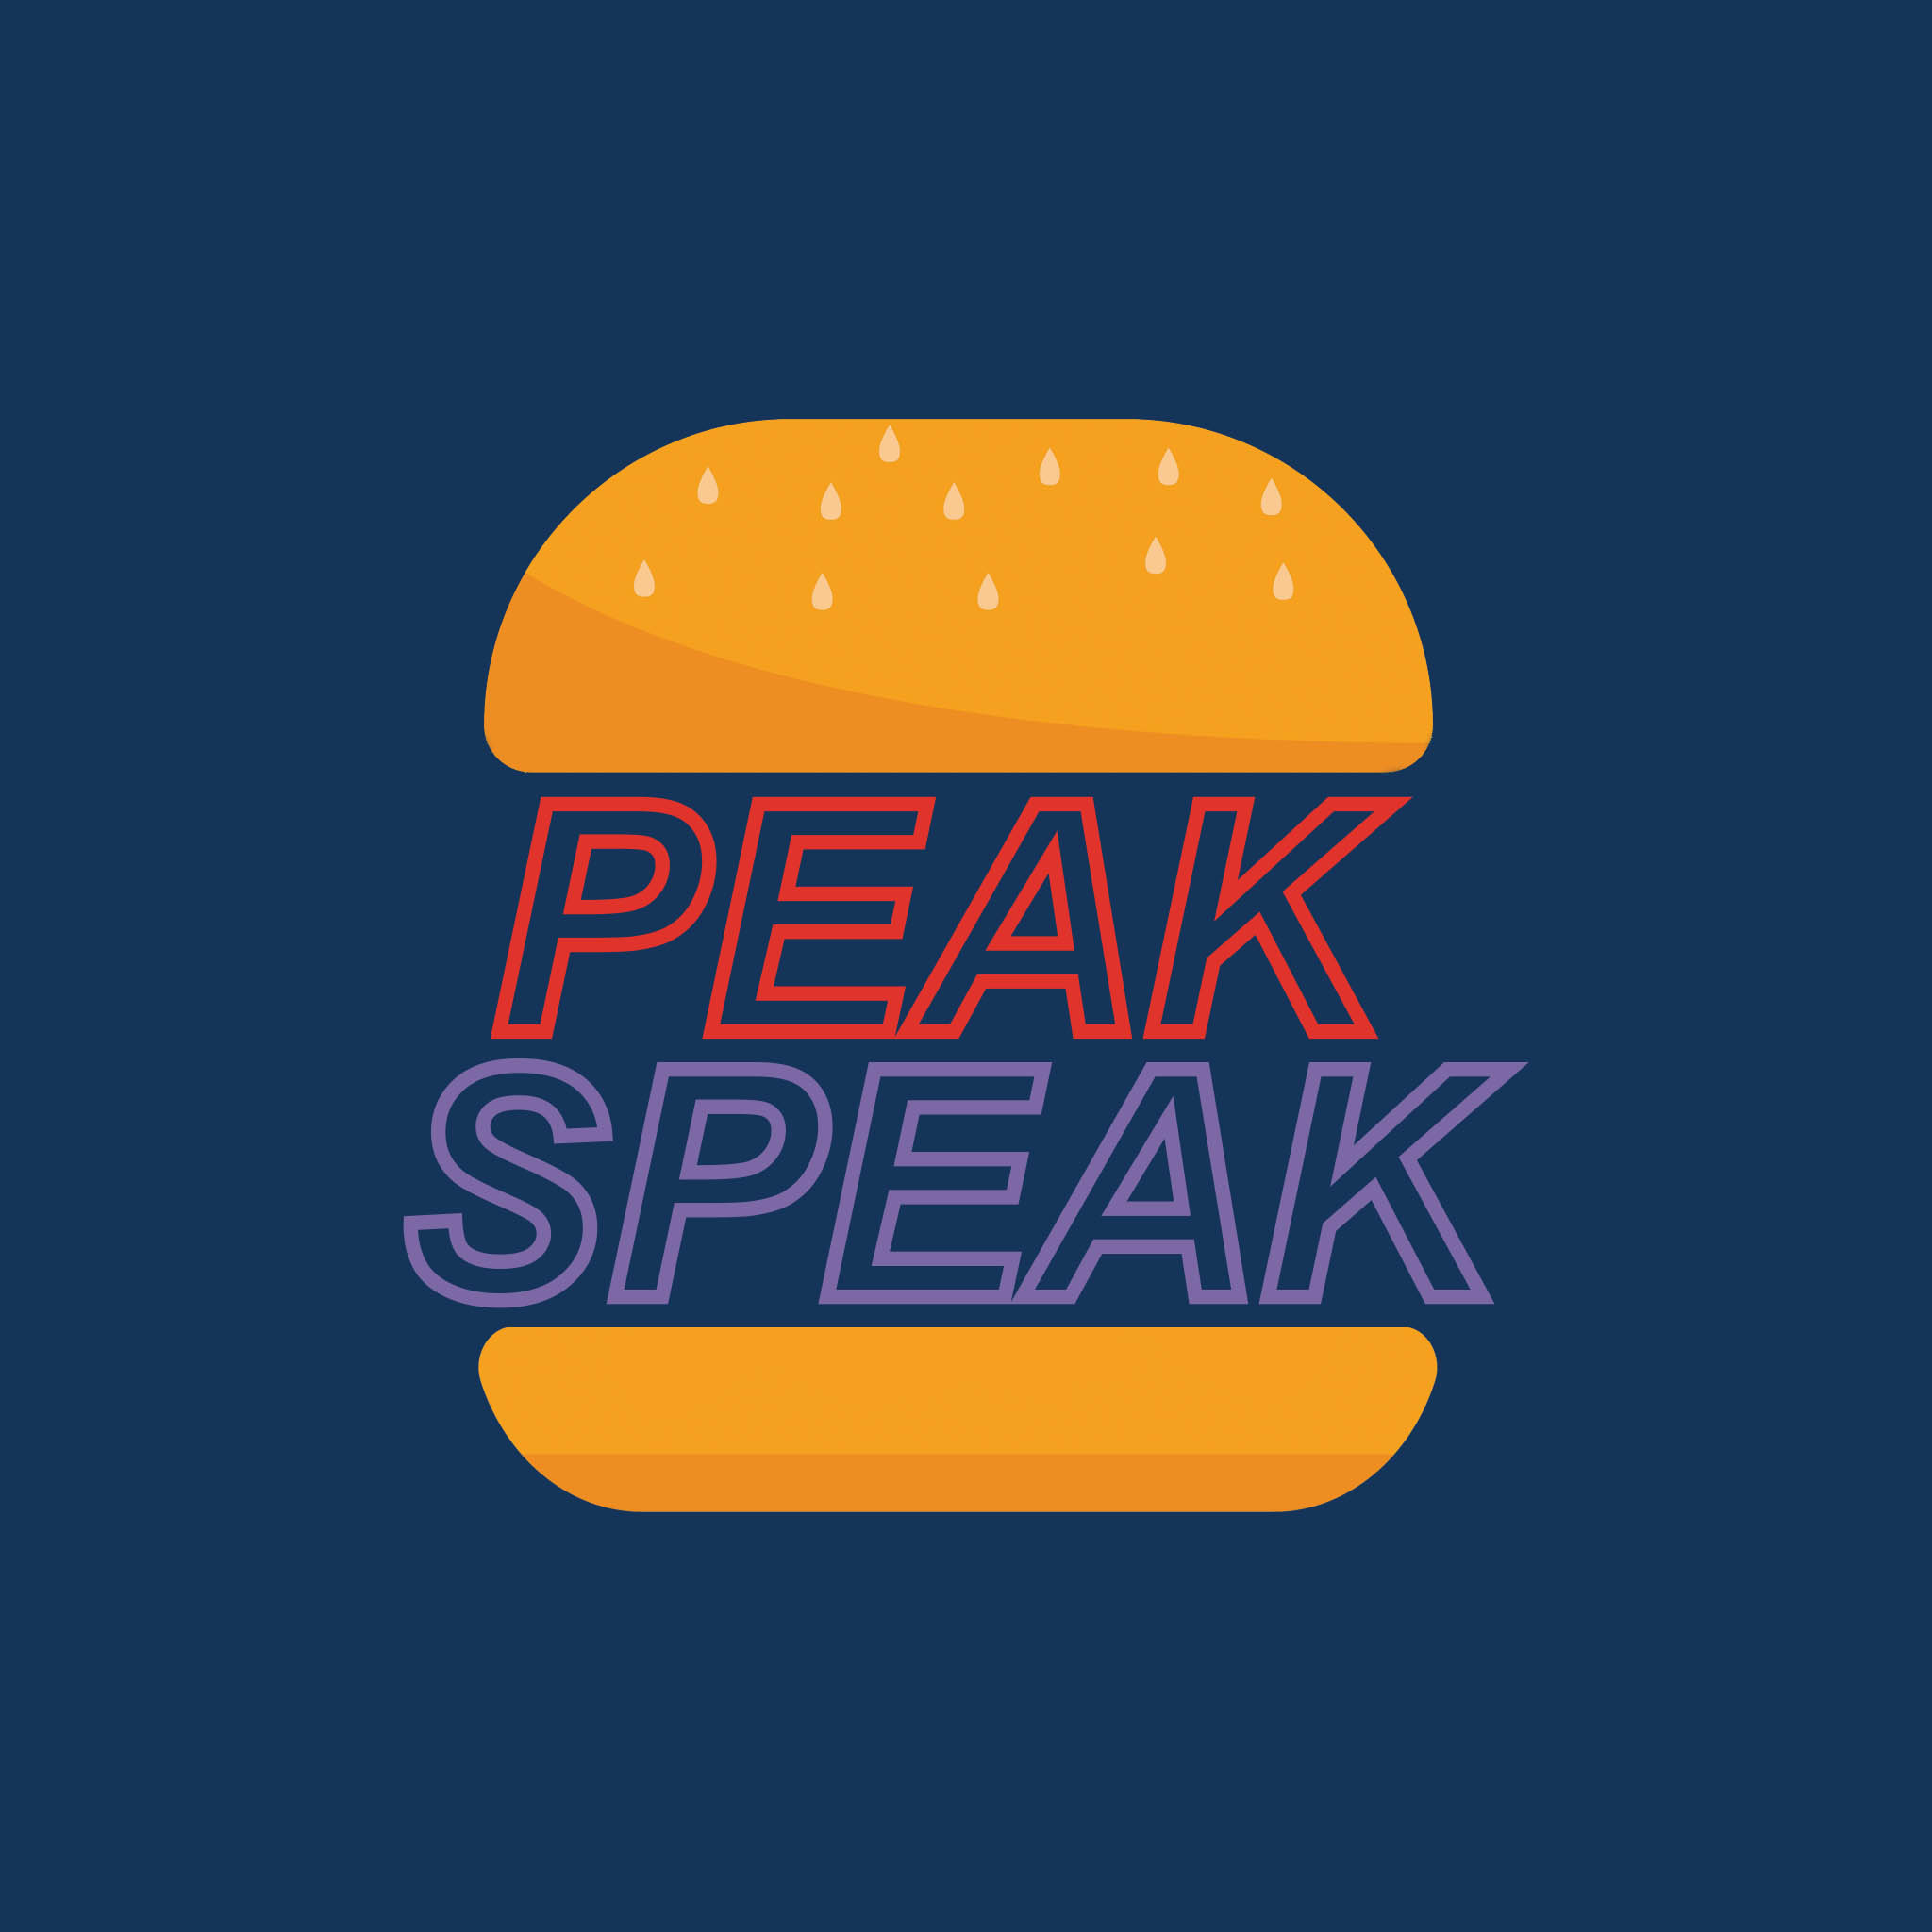 Peak Speak Episode 05: We talk lifting with Chad Wesley Smith and Marisa Inda